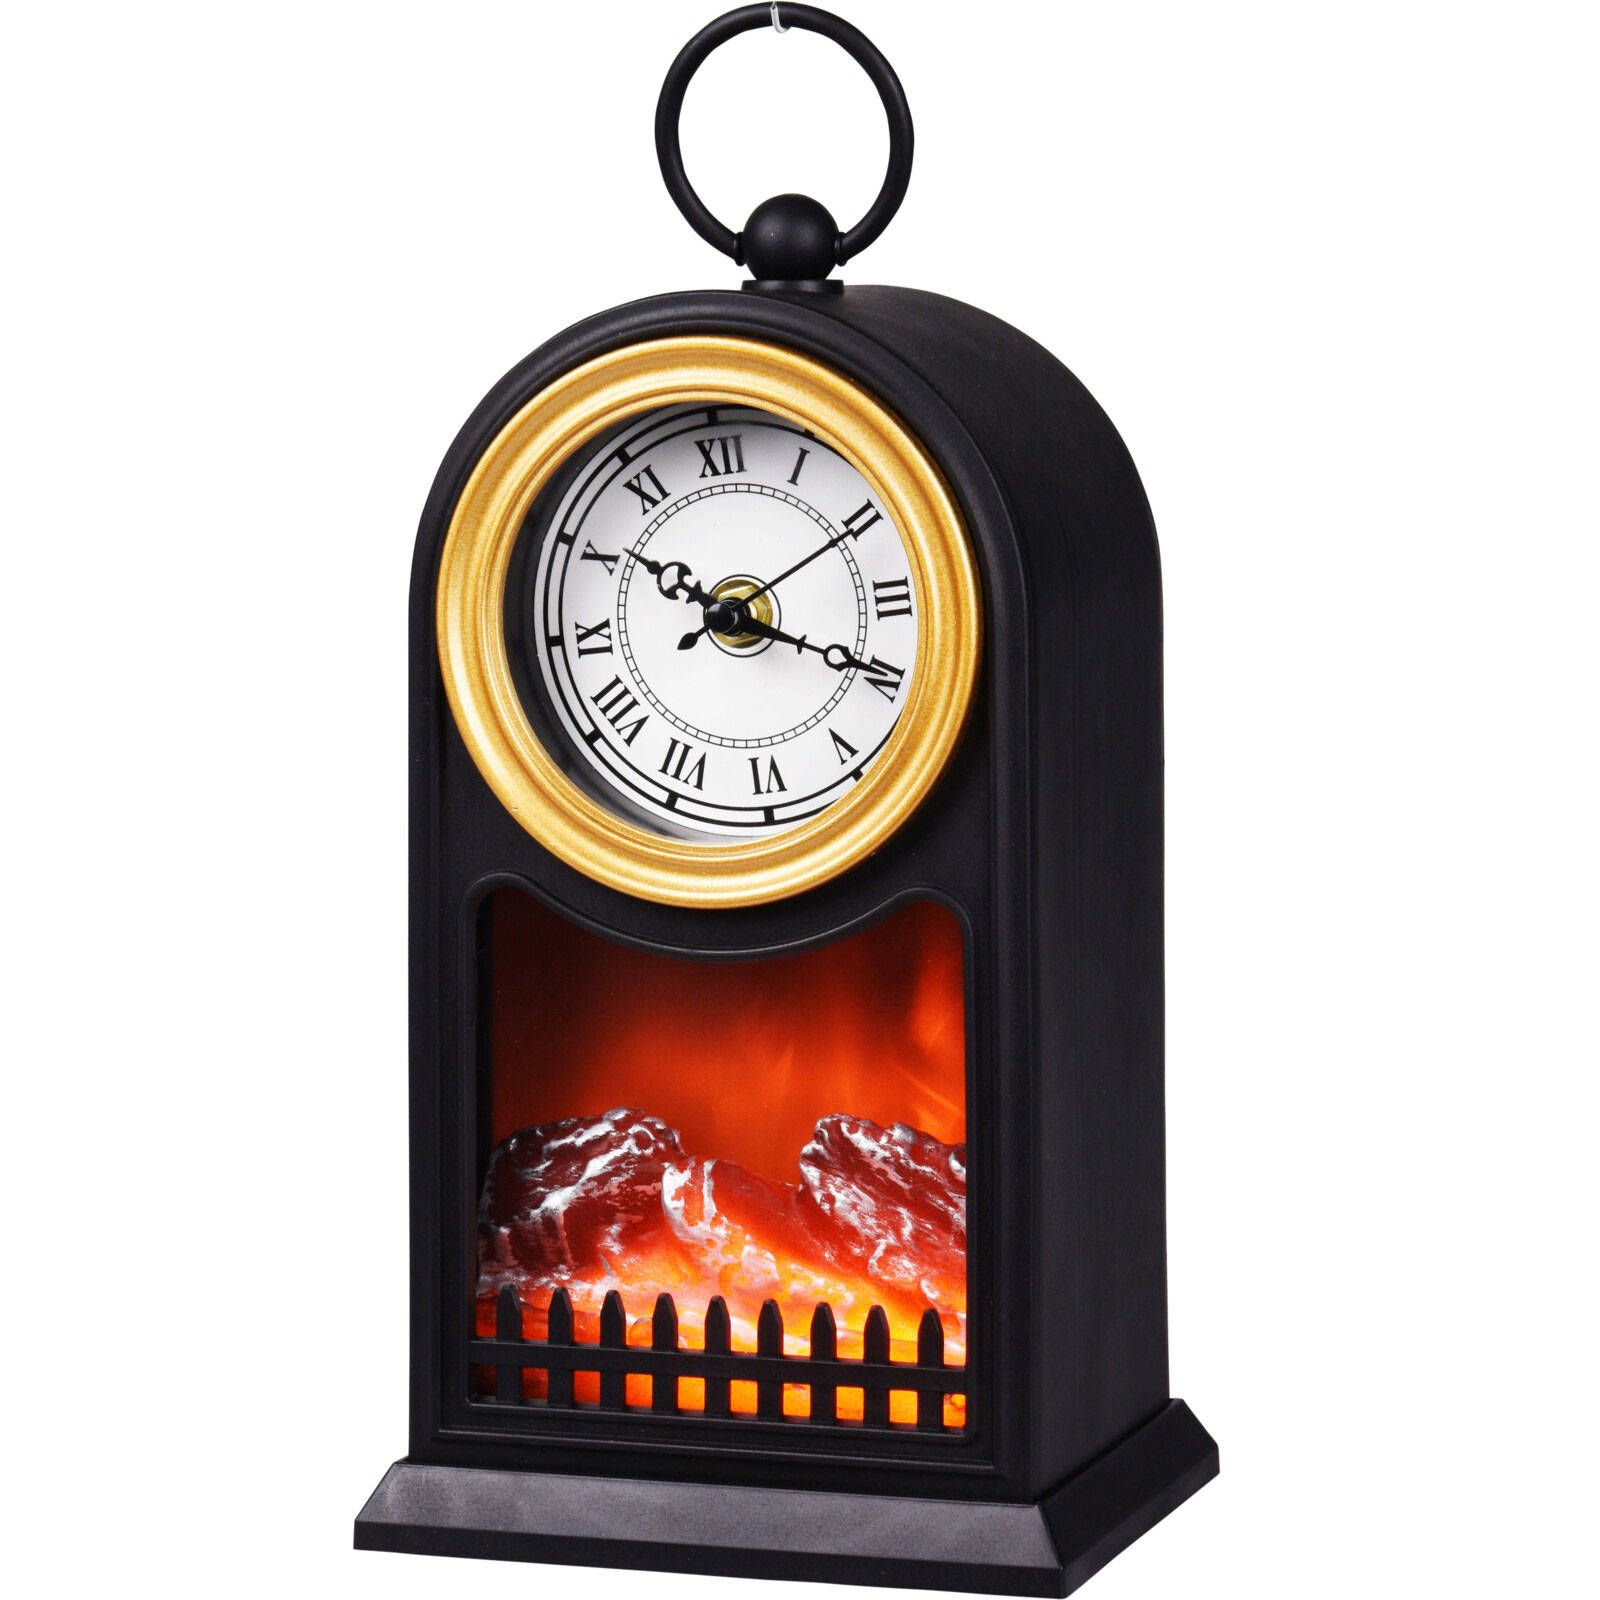 Dekorativní krb s hodinami, 26 cm, černý - EMAKO.CZ s.r.o.